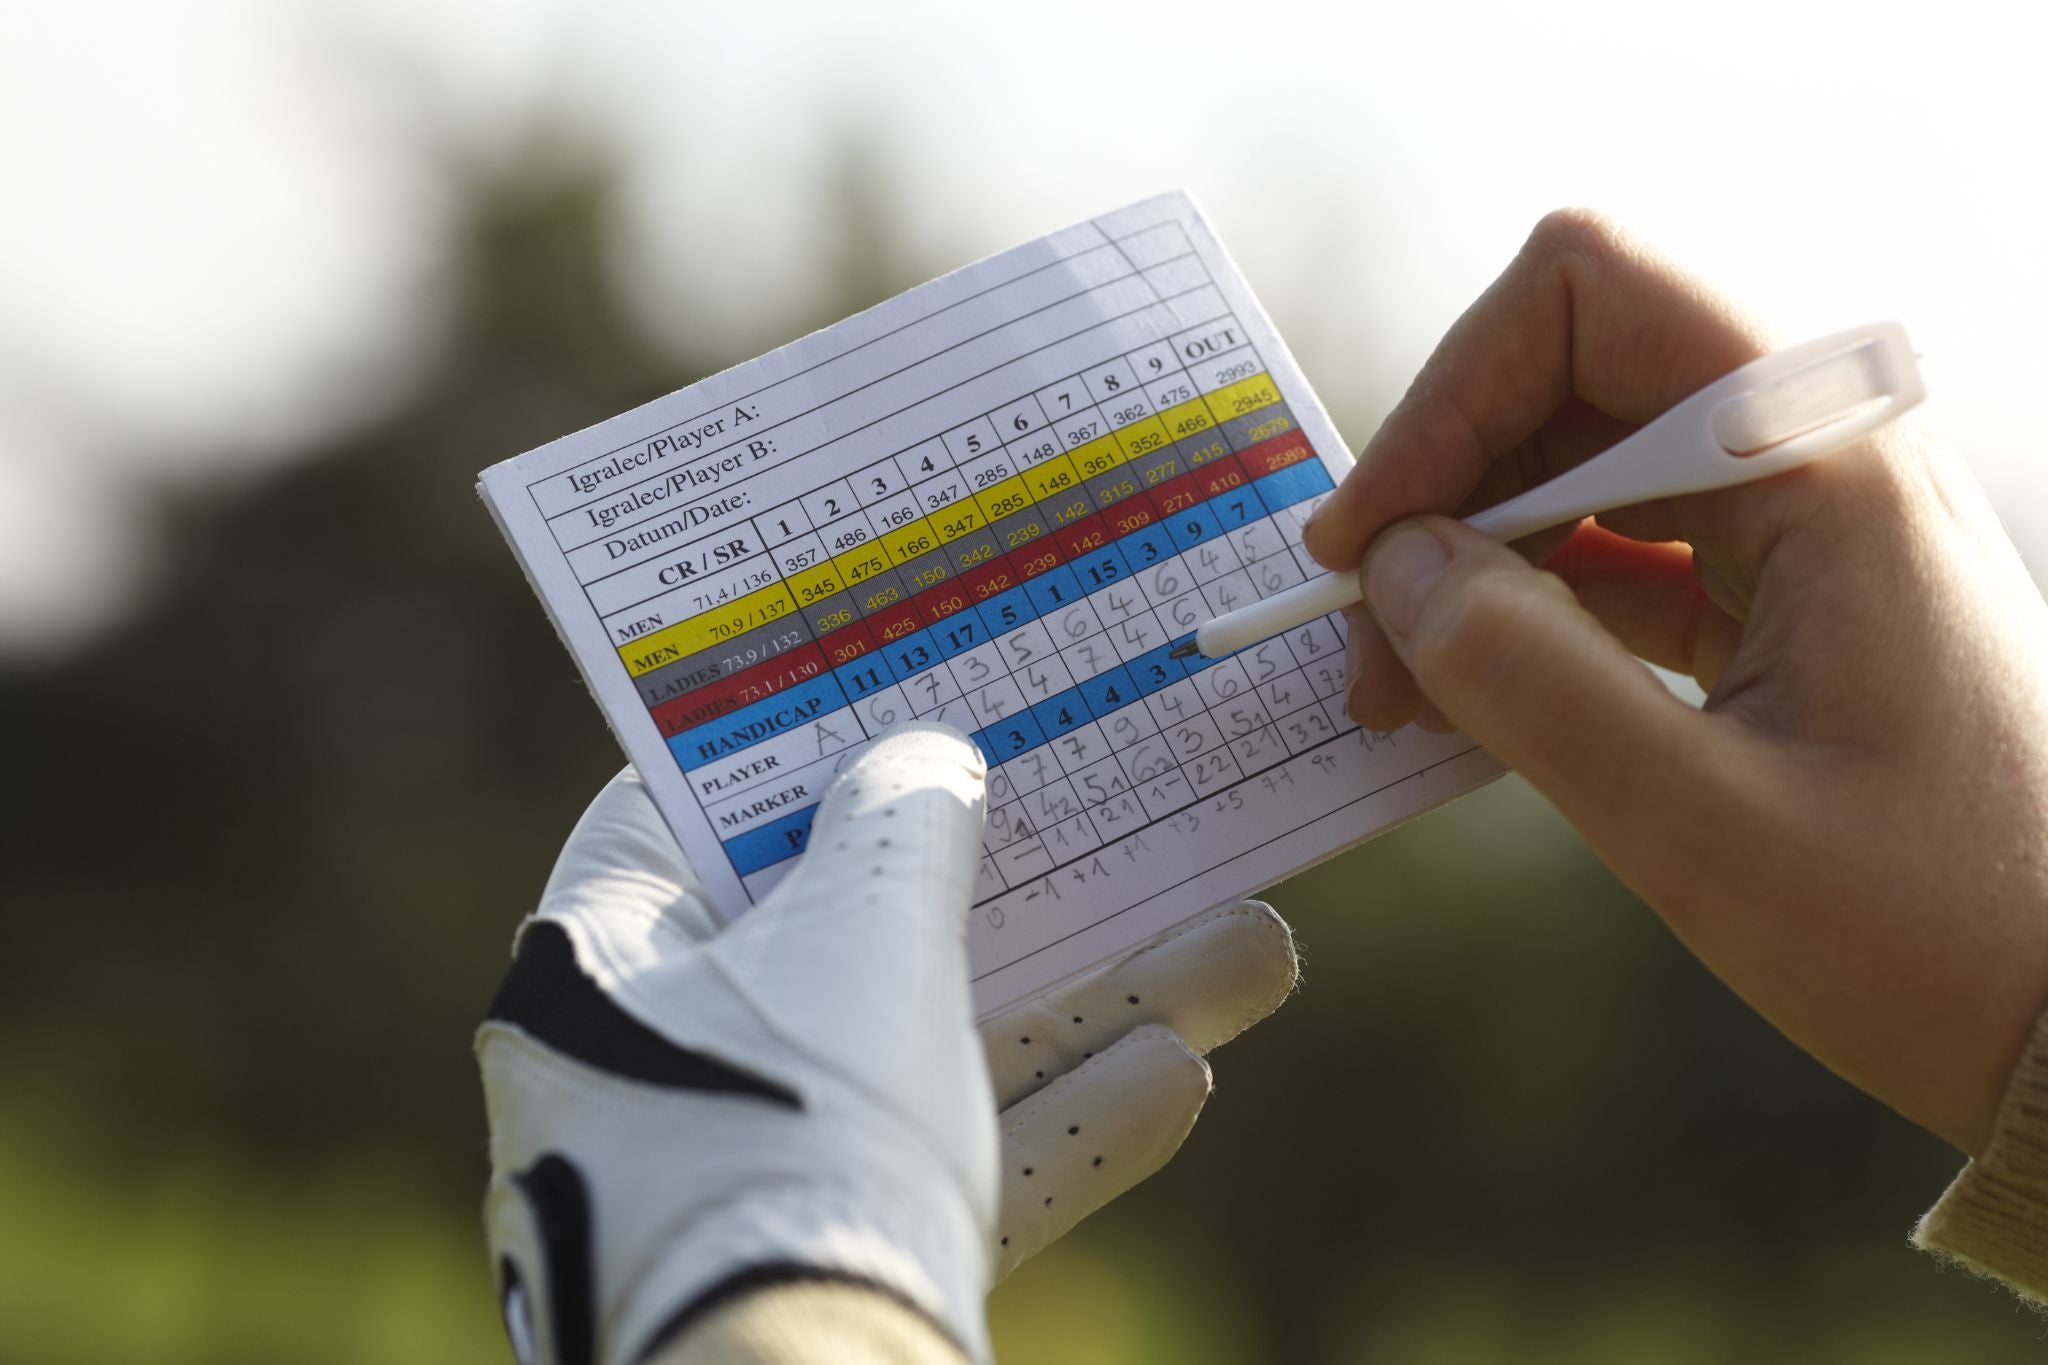 Writing golf handicap with a glove